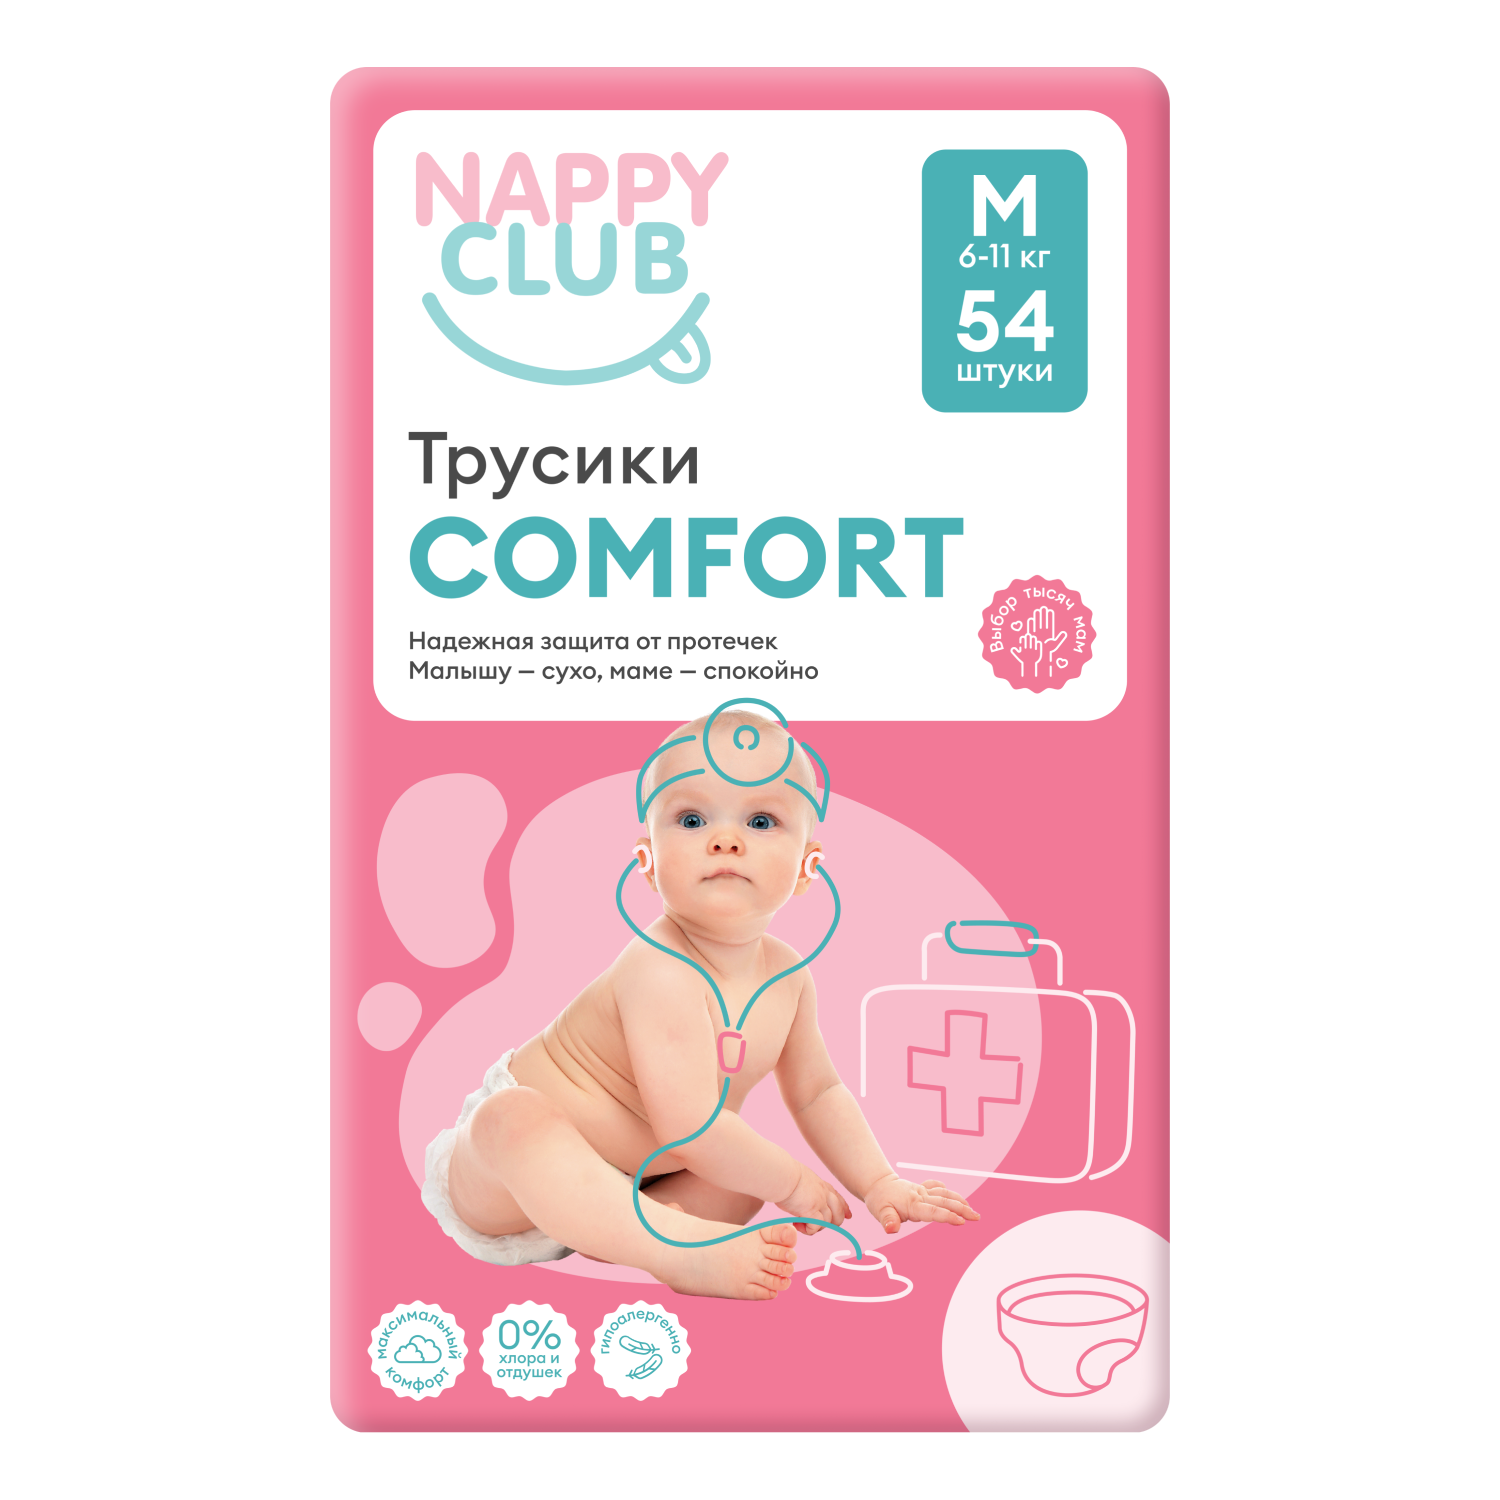 NappyClub трусики Comfort M (6-11 кг) 54 шт. nappyclub трусики comfort xl 12 20 кг 38 шт